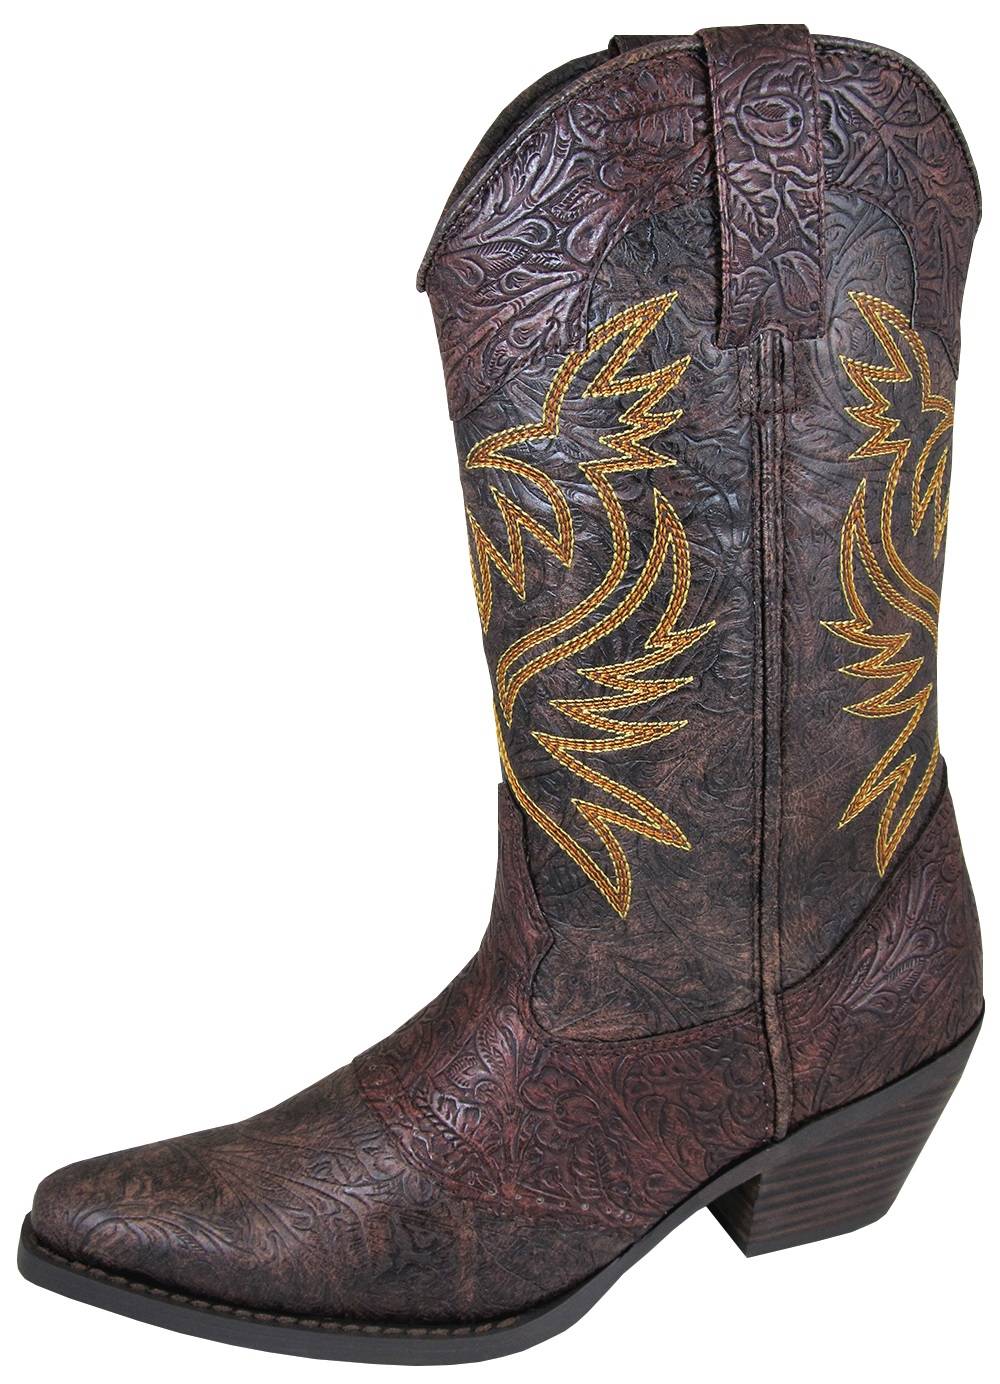 Smoky Mountain Julia Boots - Ladies, Brown